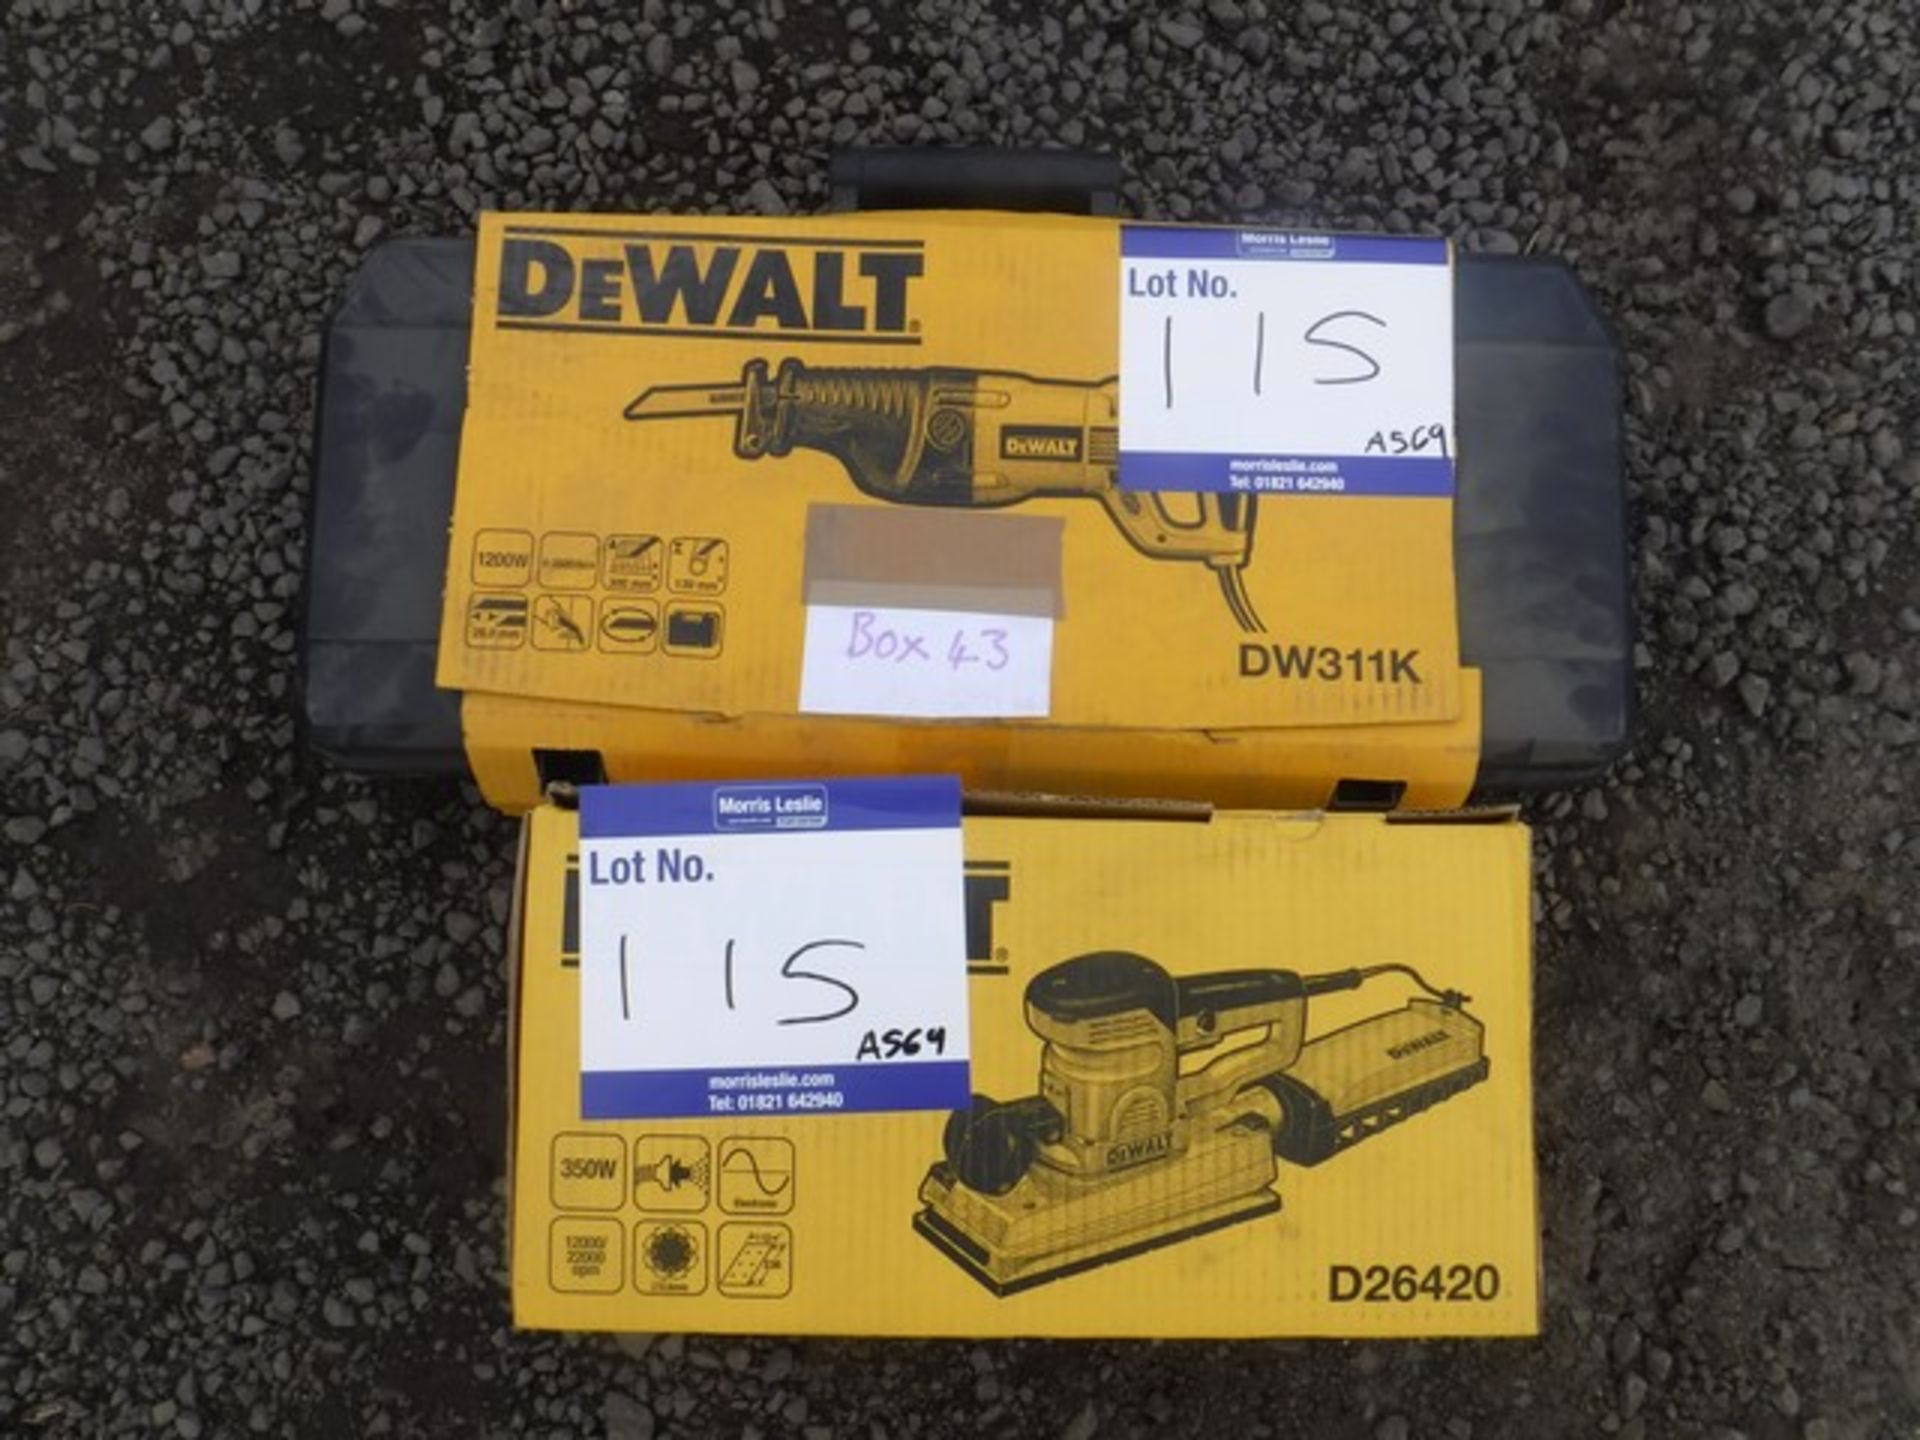 DEWALT DW311K reciprocating saw & DEWALT D26420 sander